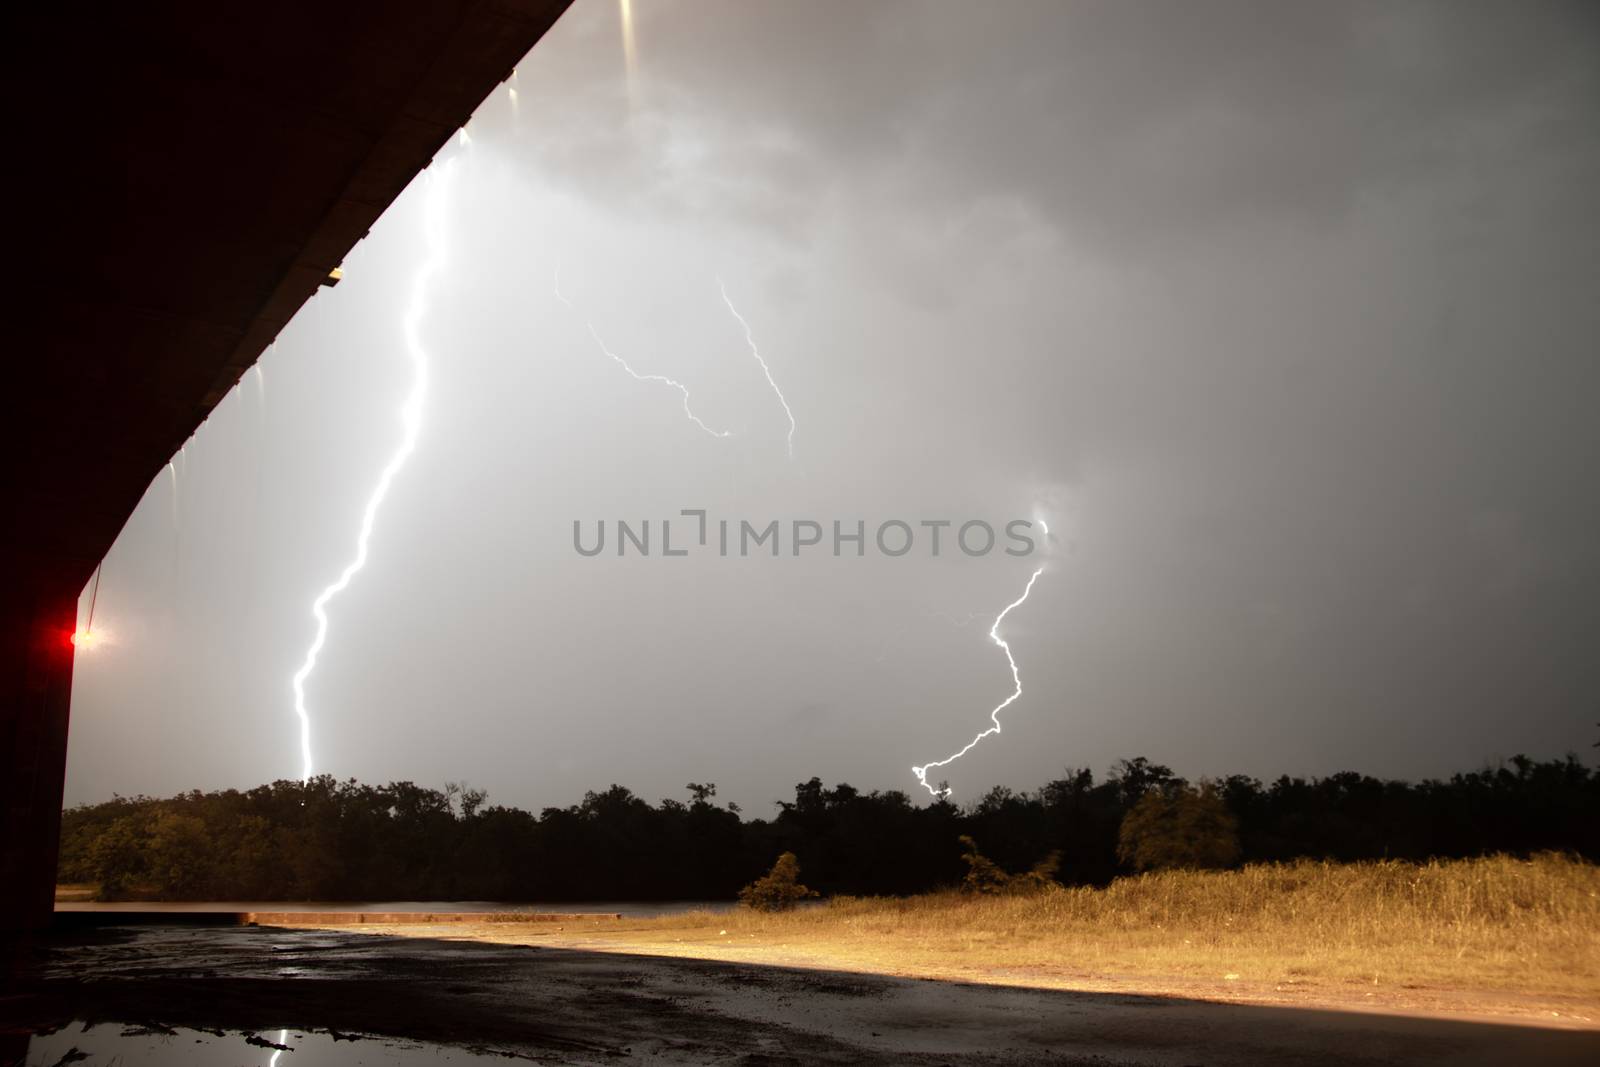 Deep South Thunderstorm Lightning Strike over River by ChrisBoswell